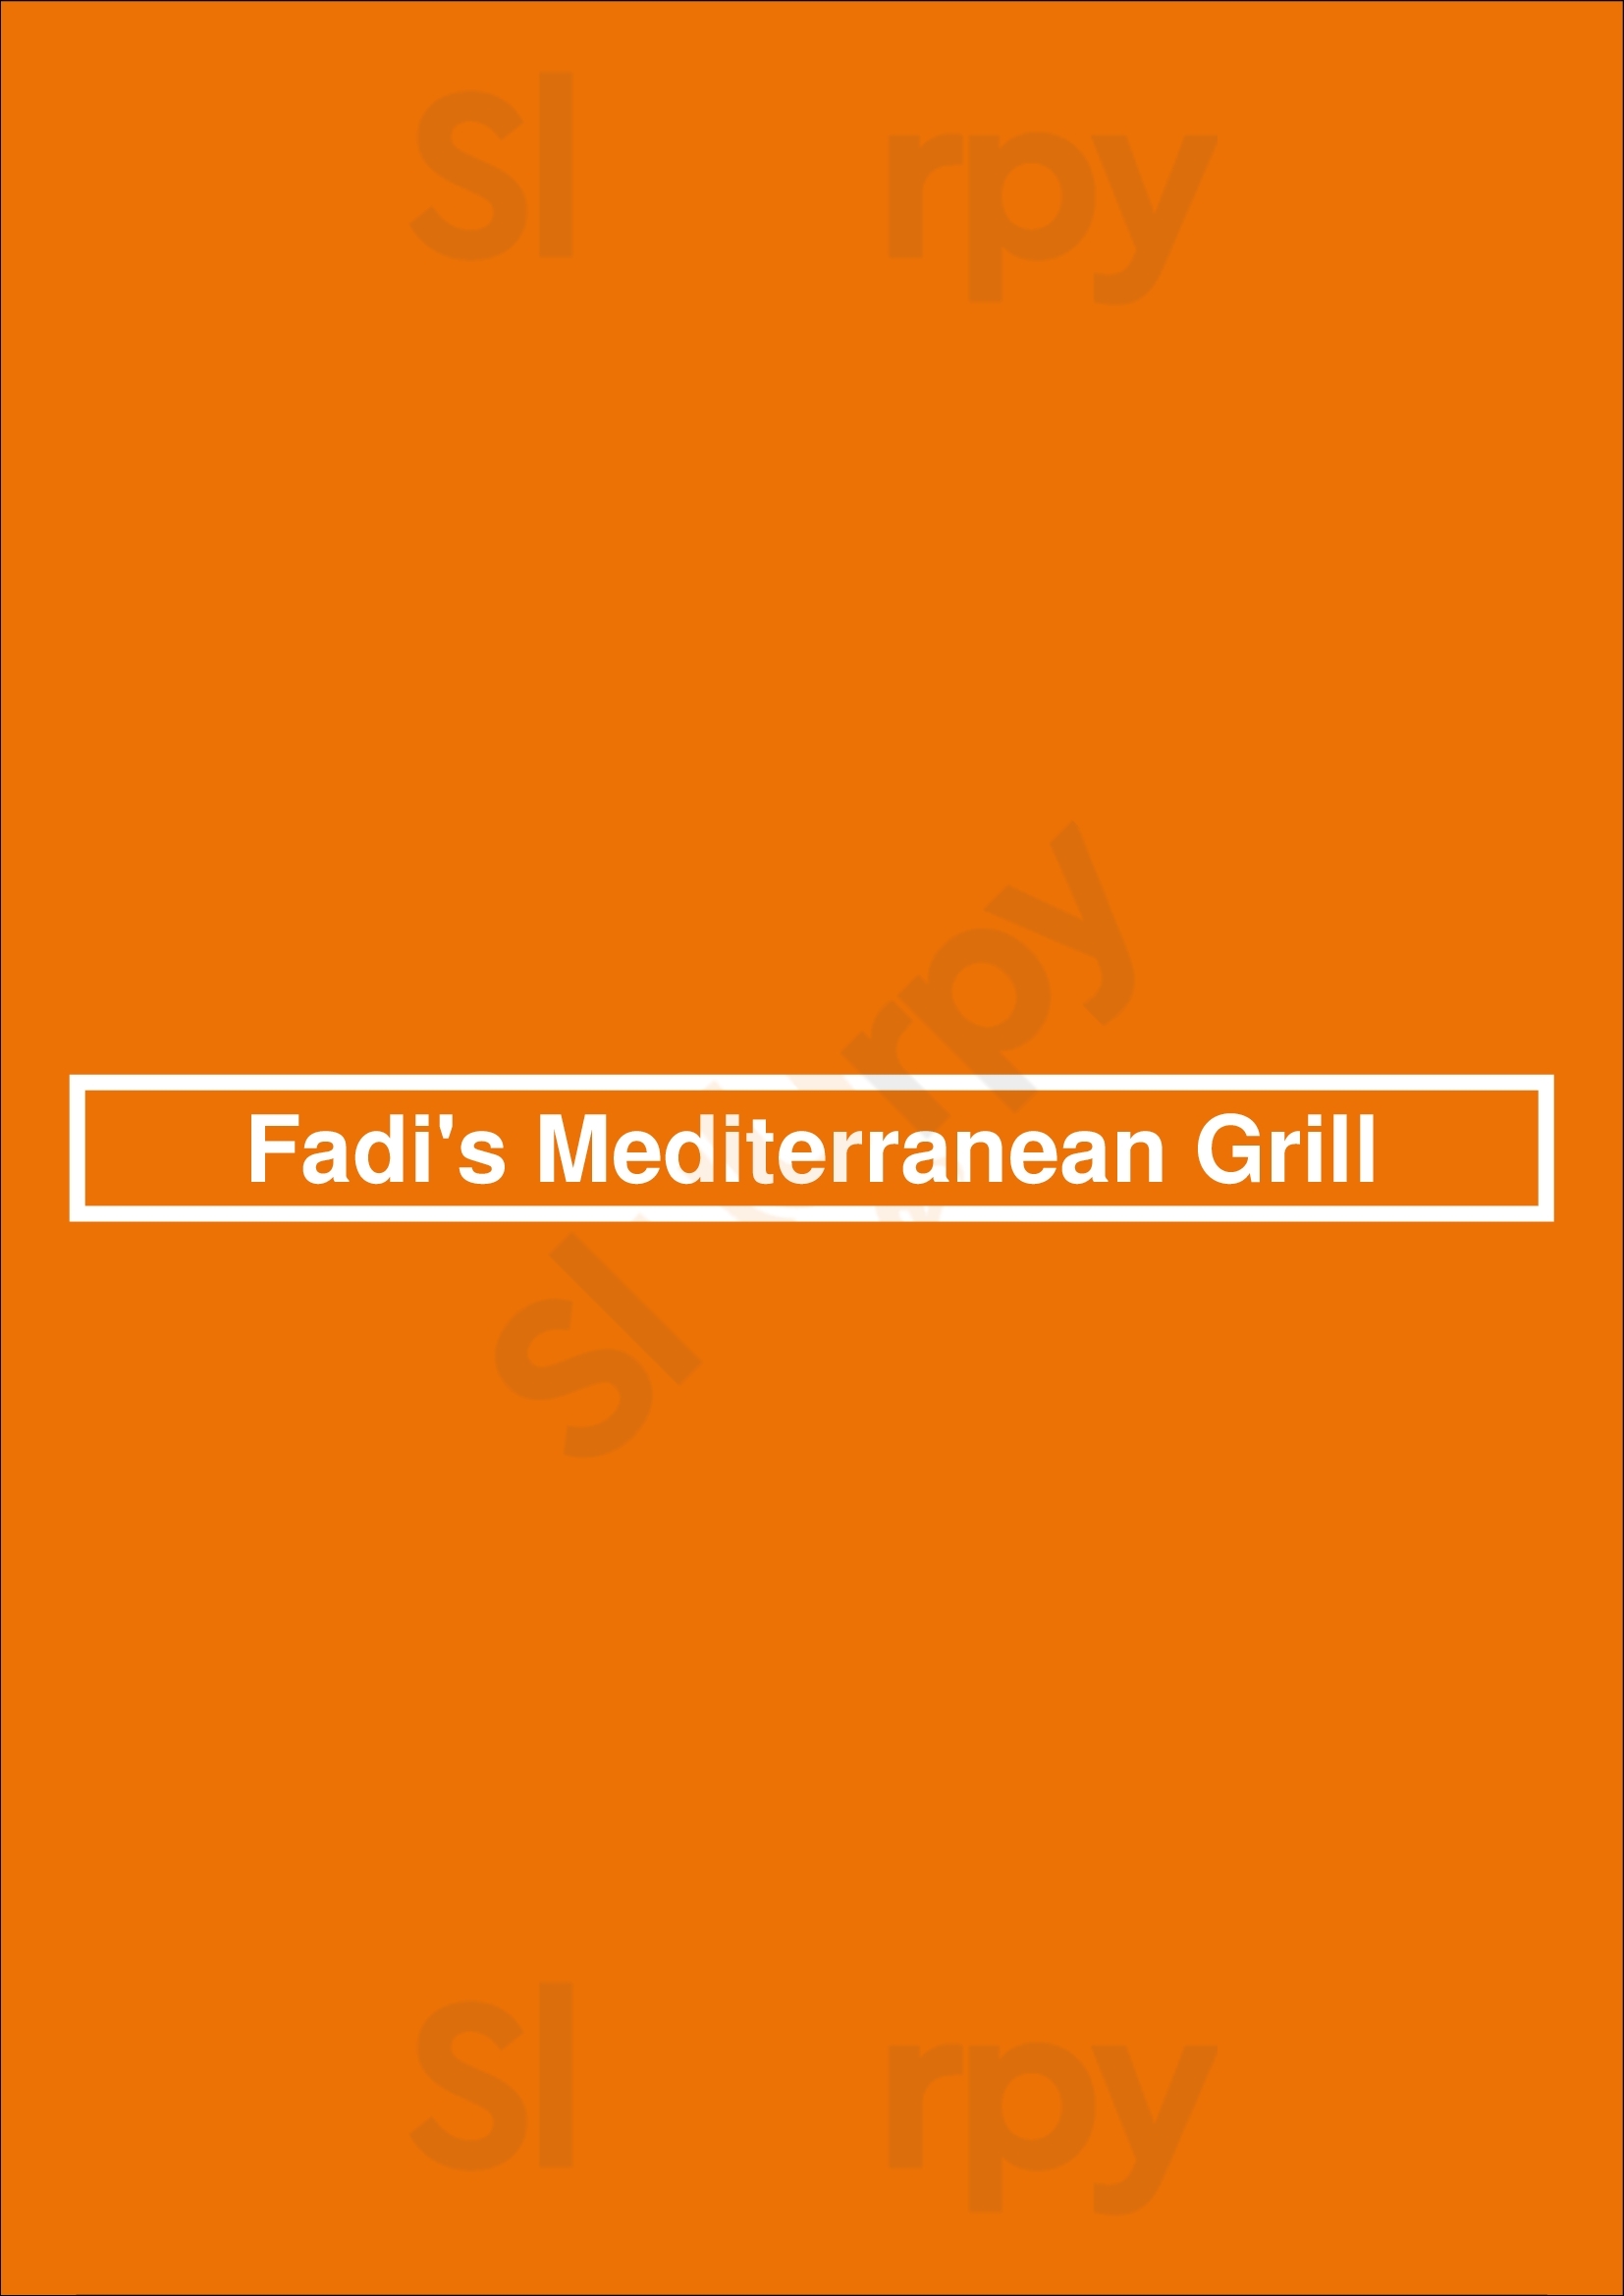 Fadi's Mediterranean Grill Houston Menu - 1